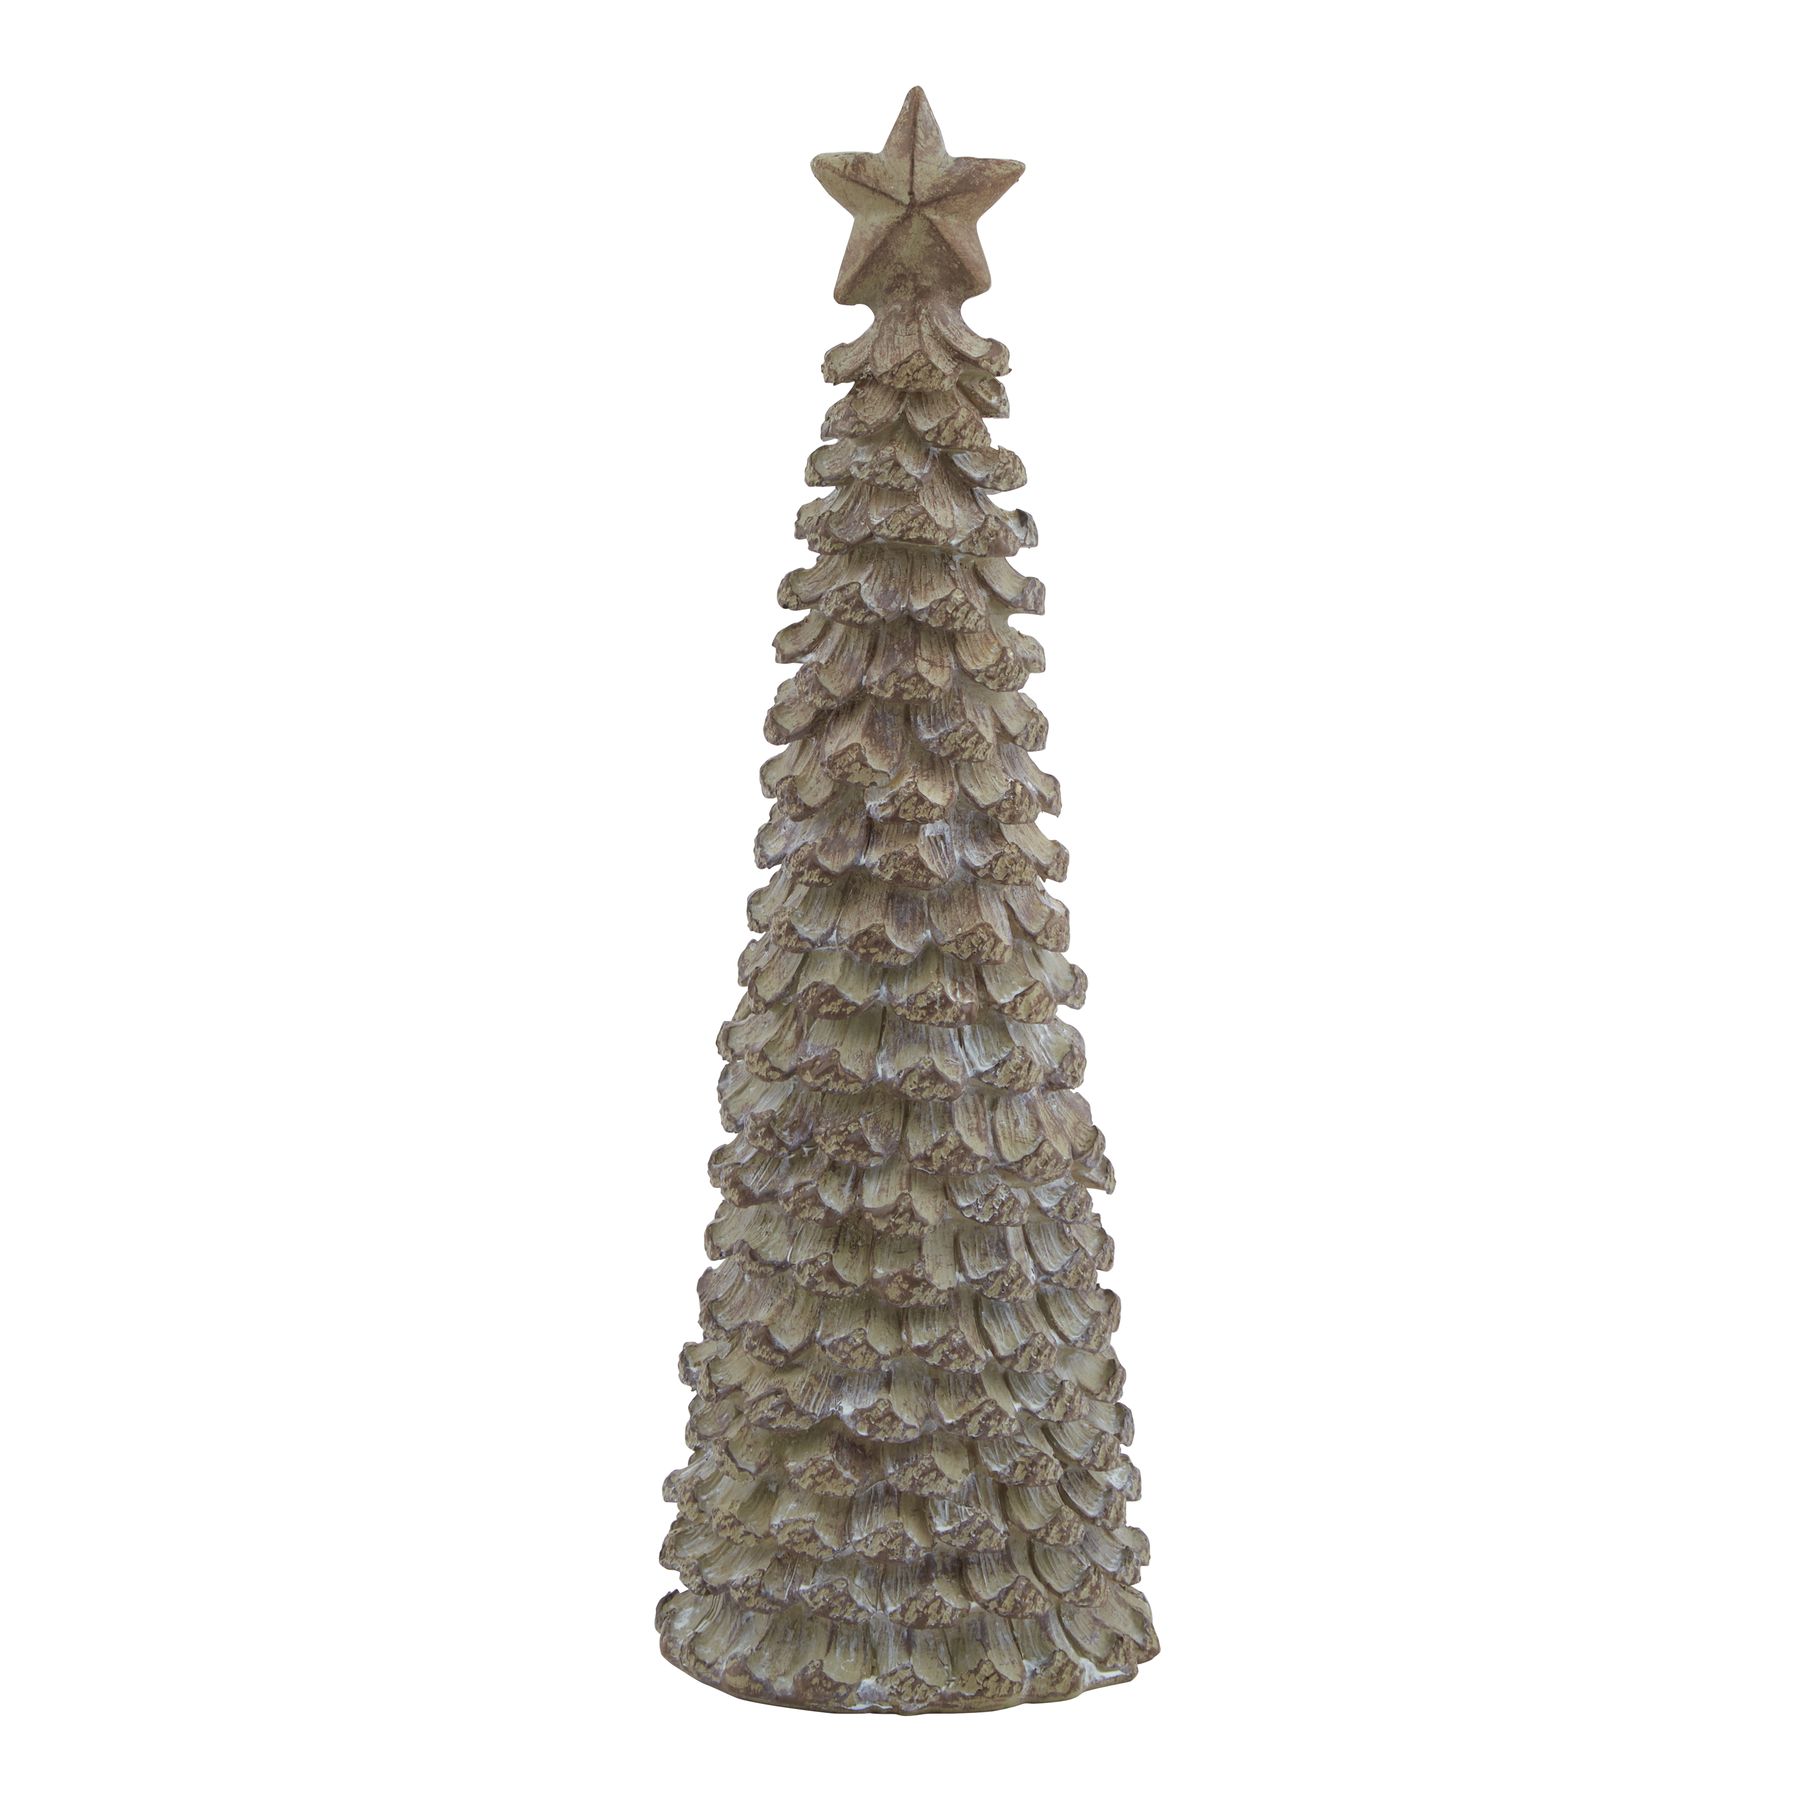 Medium Beige Cedar Tree With Star - Image 1